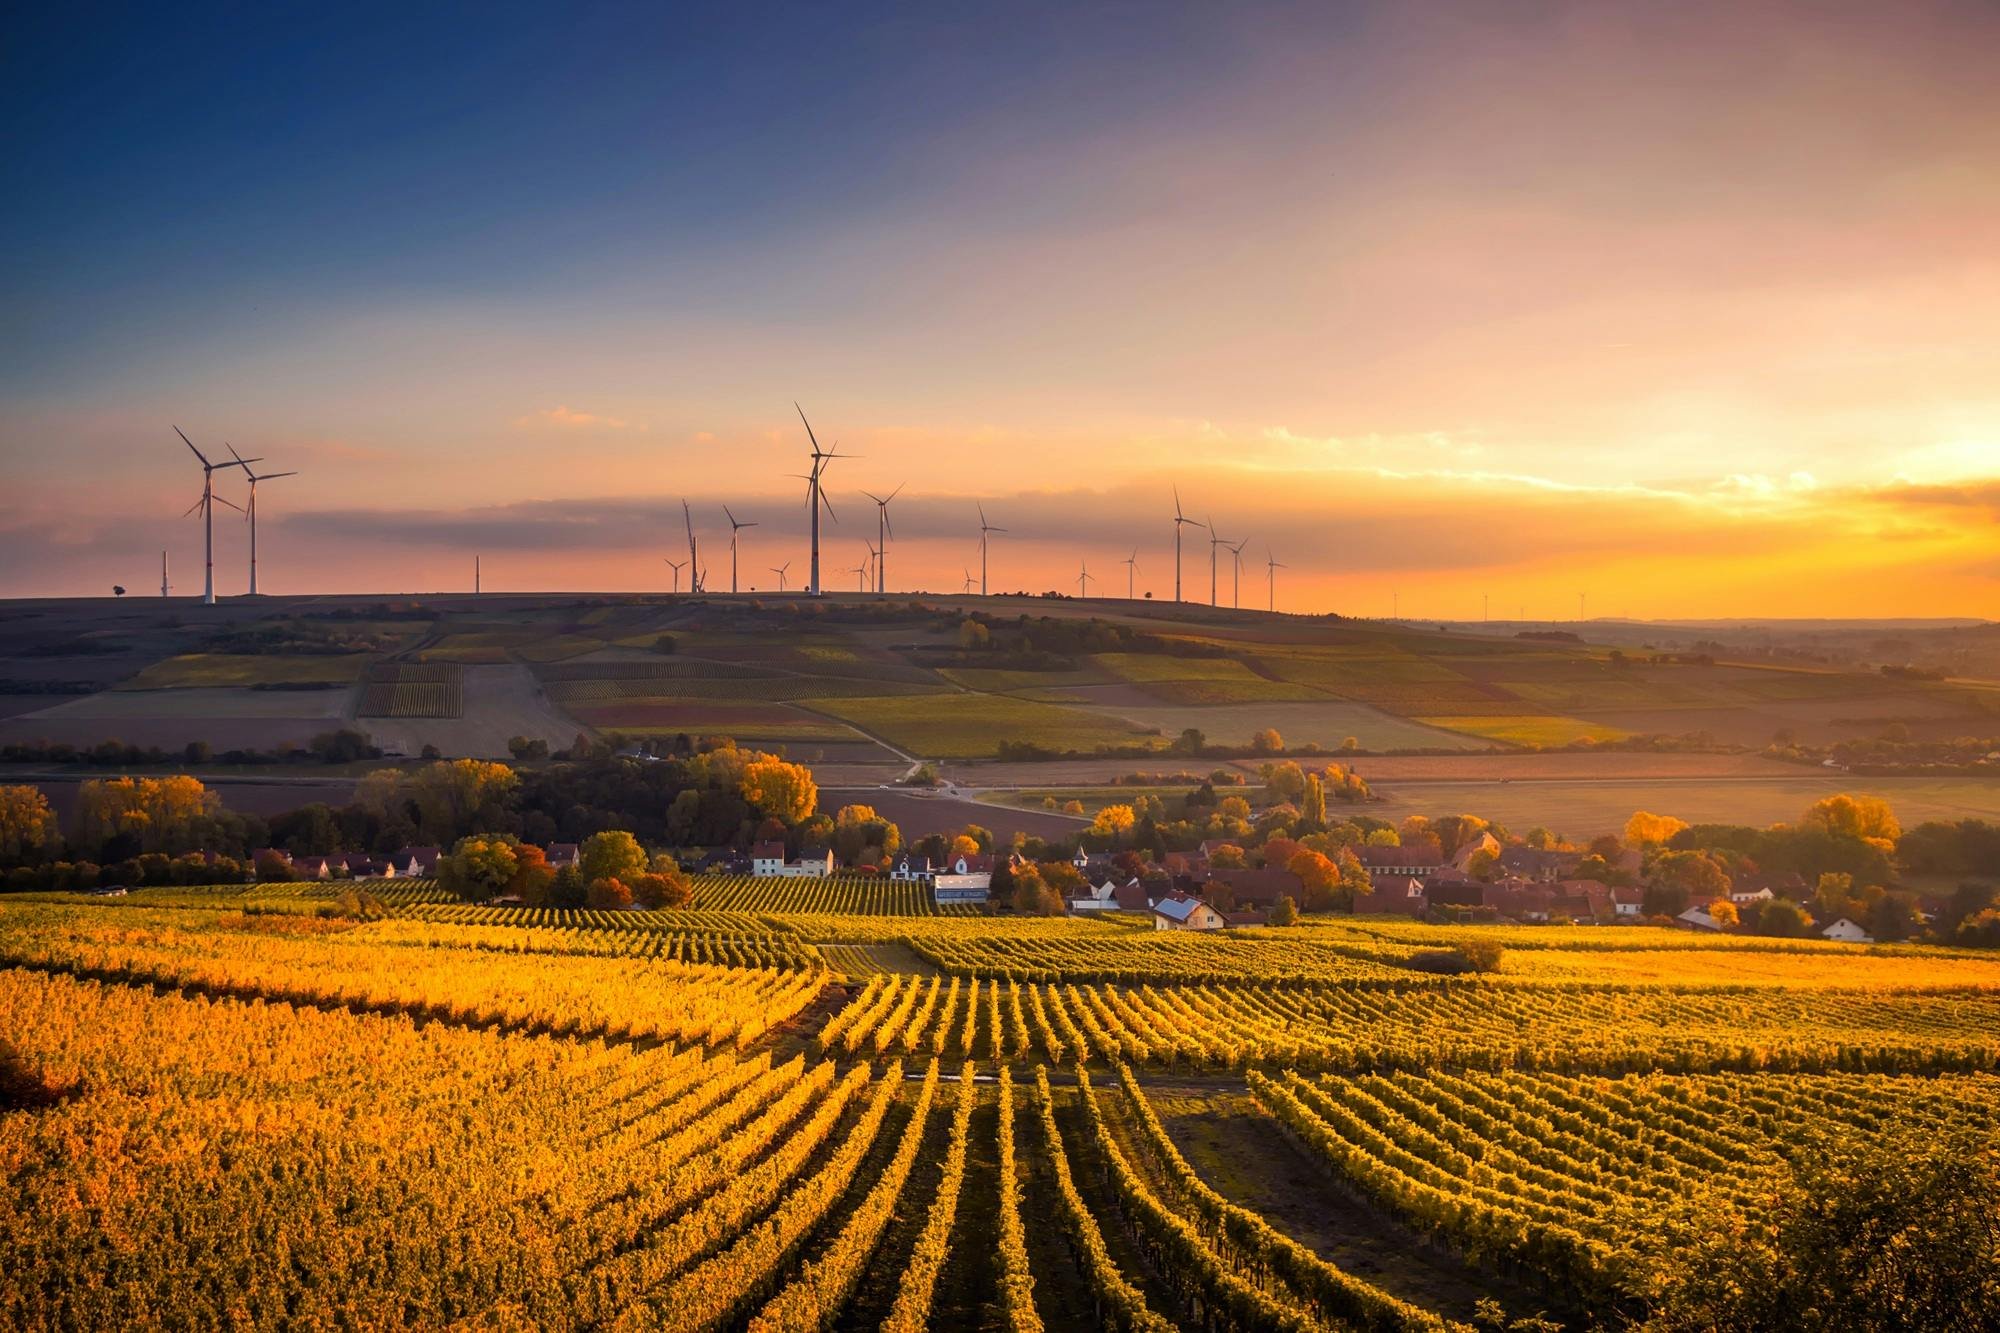 Climate Governance Initiative Germany